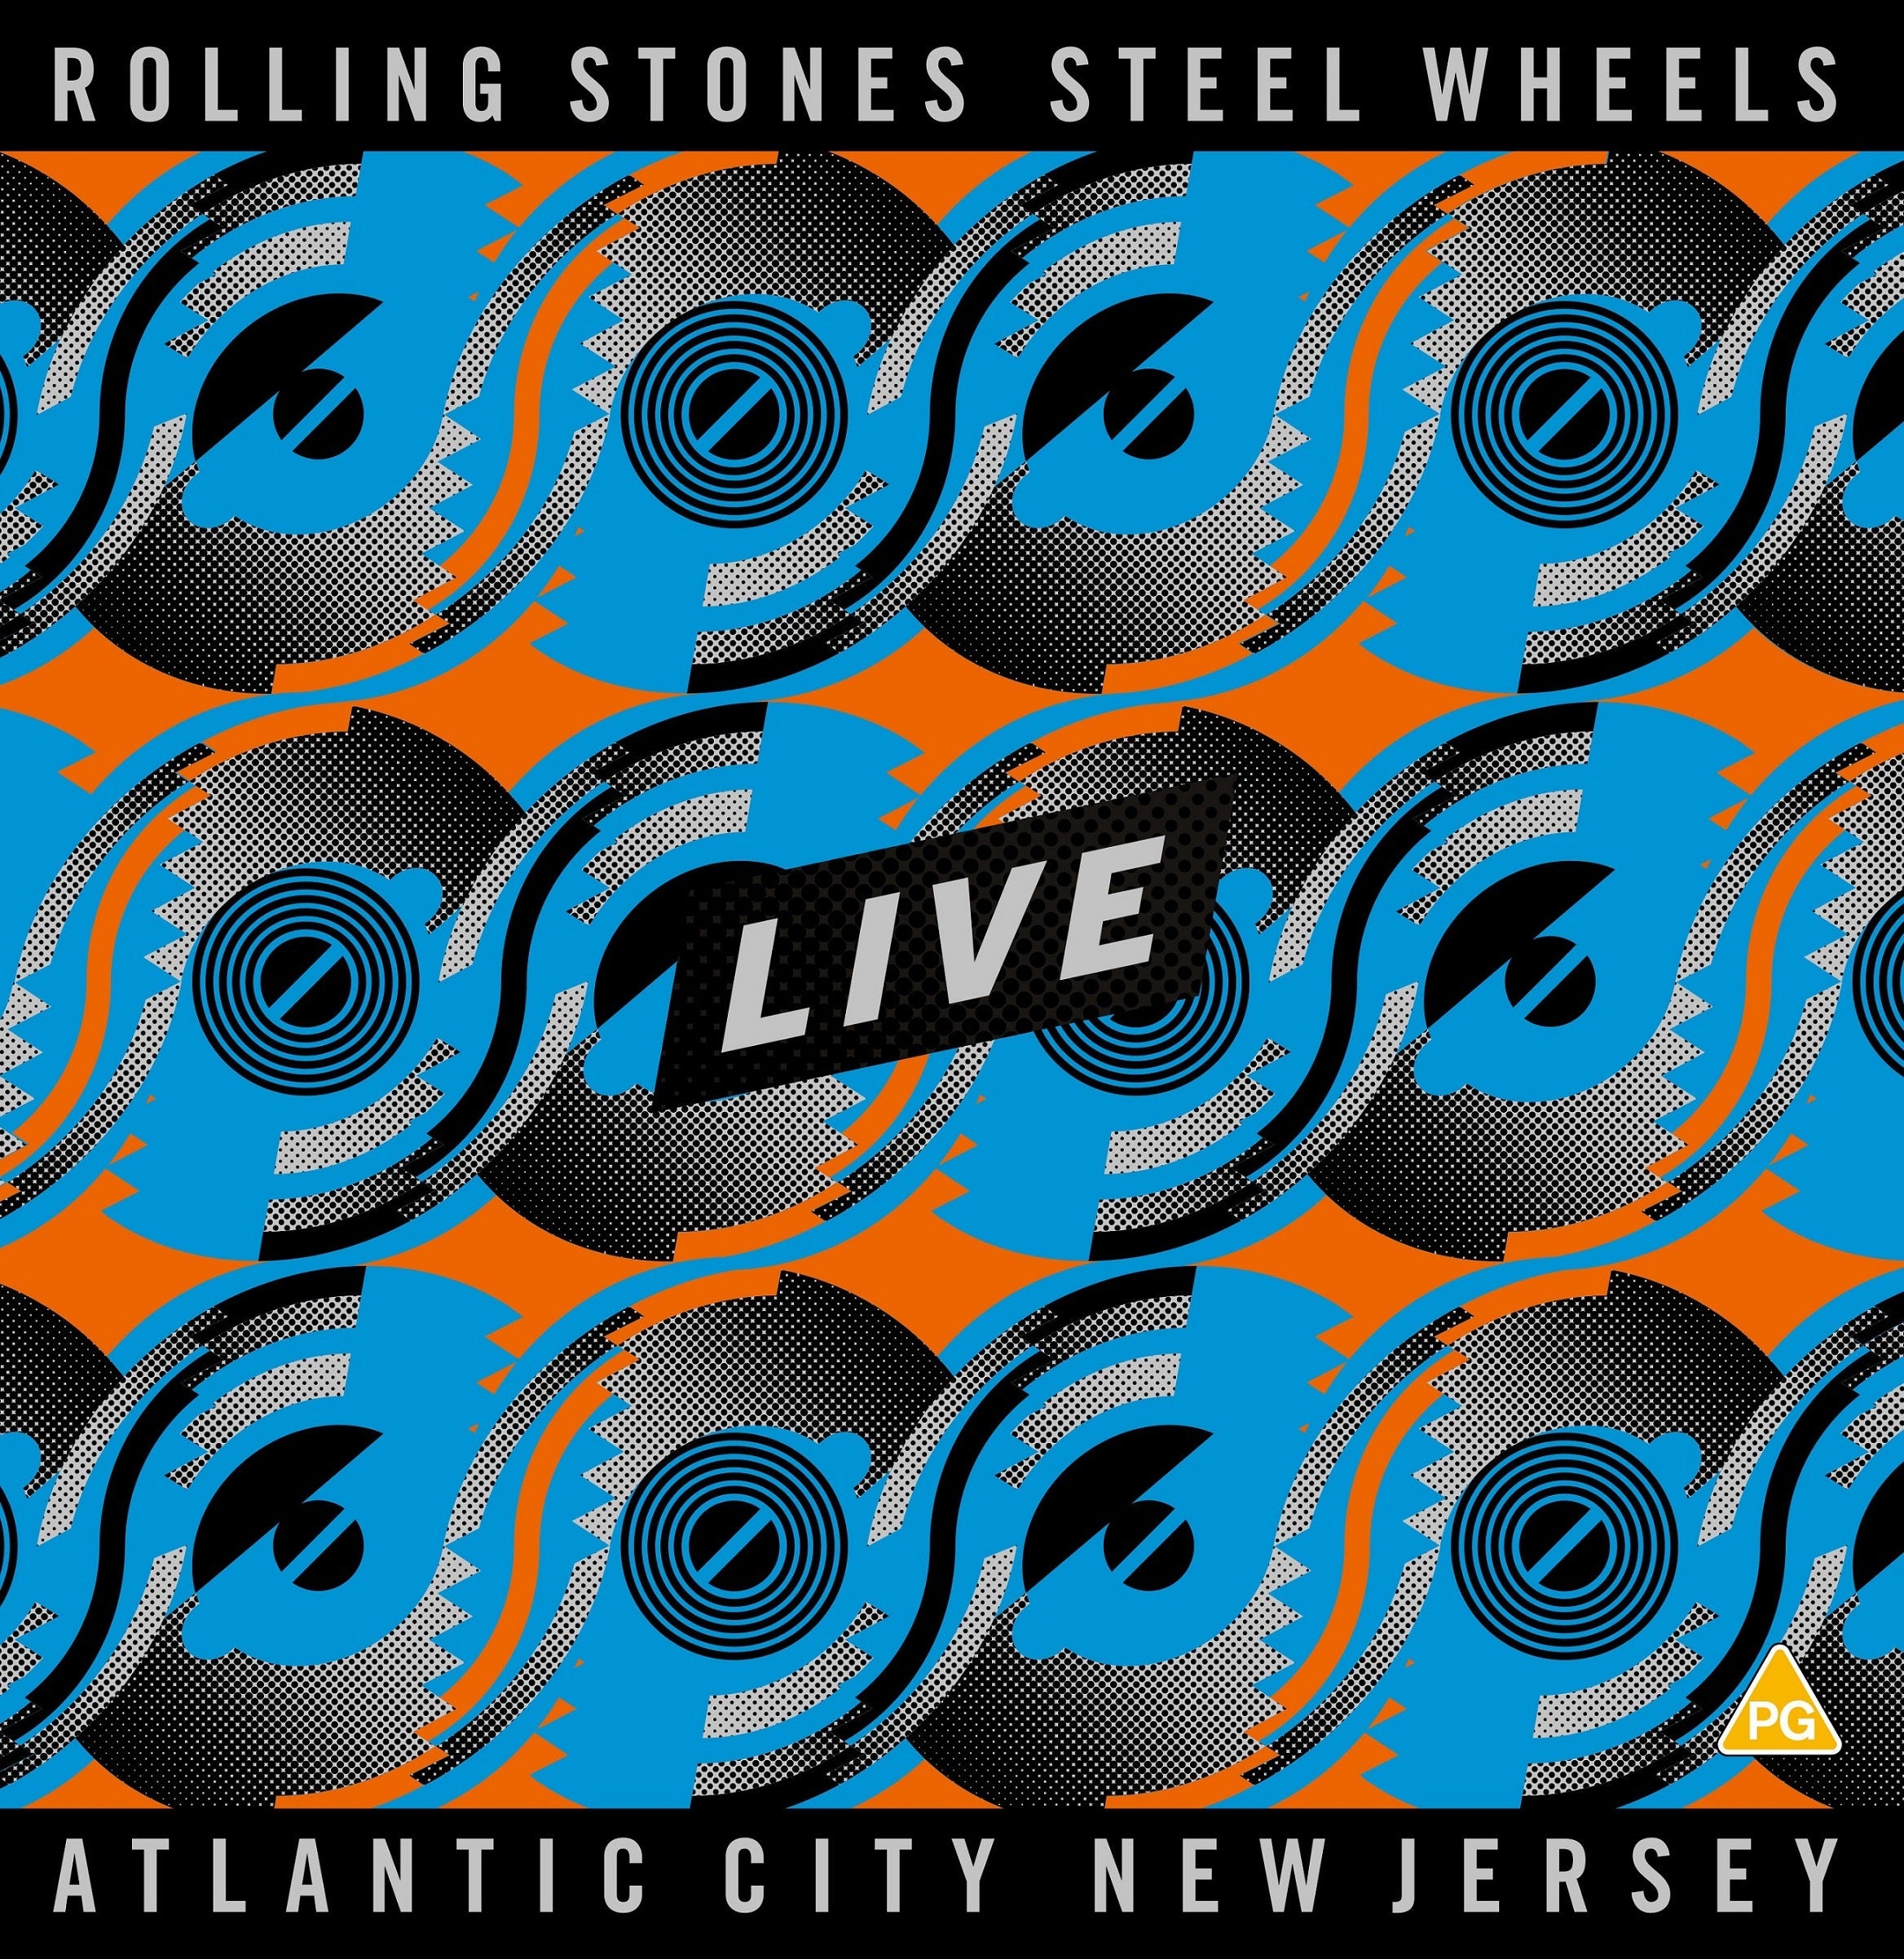 Steel Wheels Live - 4 vinyles standards